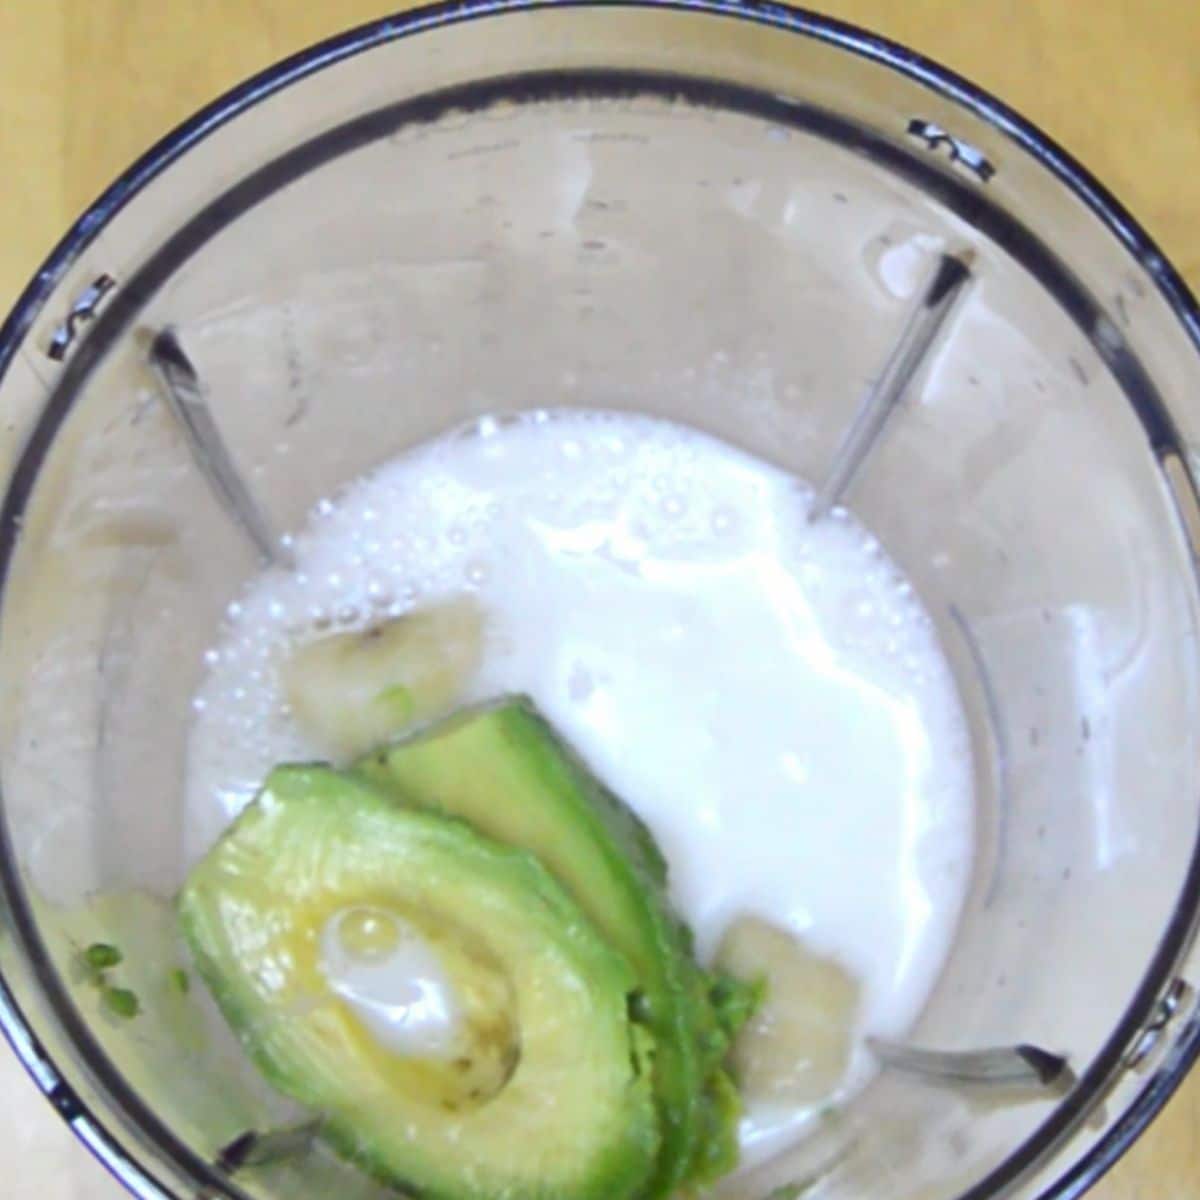 avocado banana and milk in a blender jar.